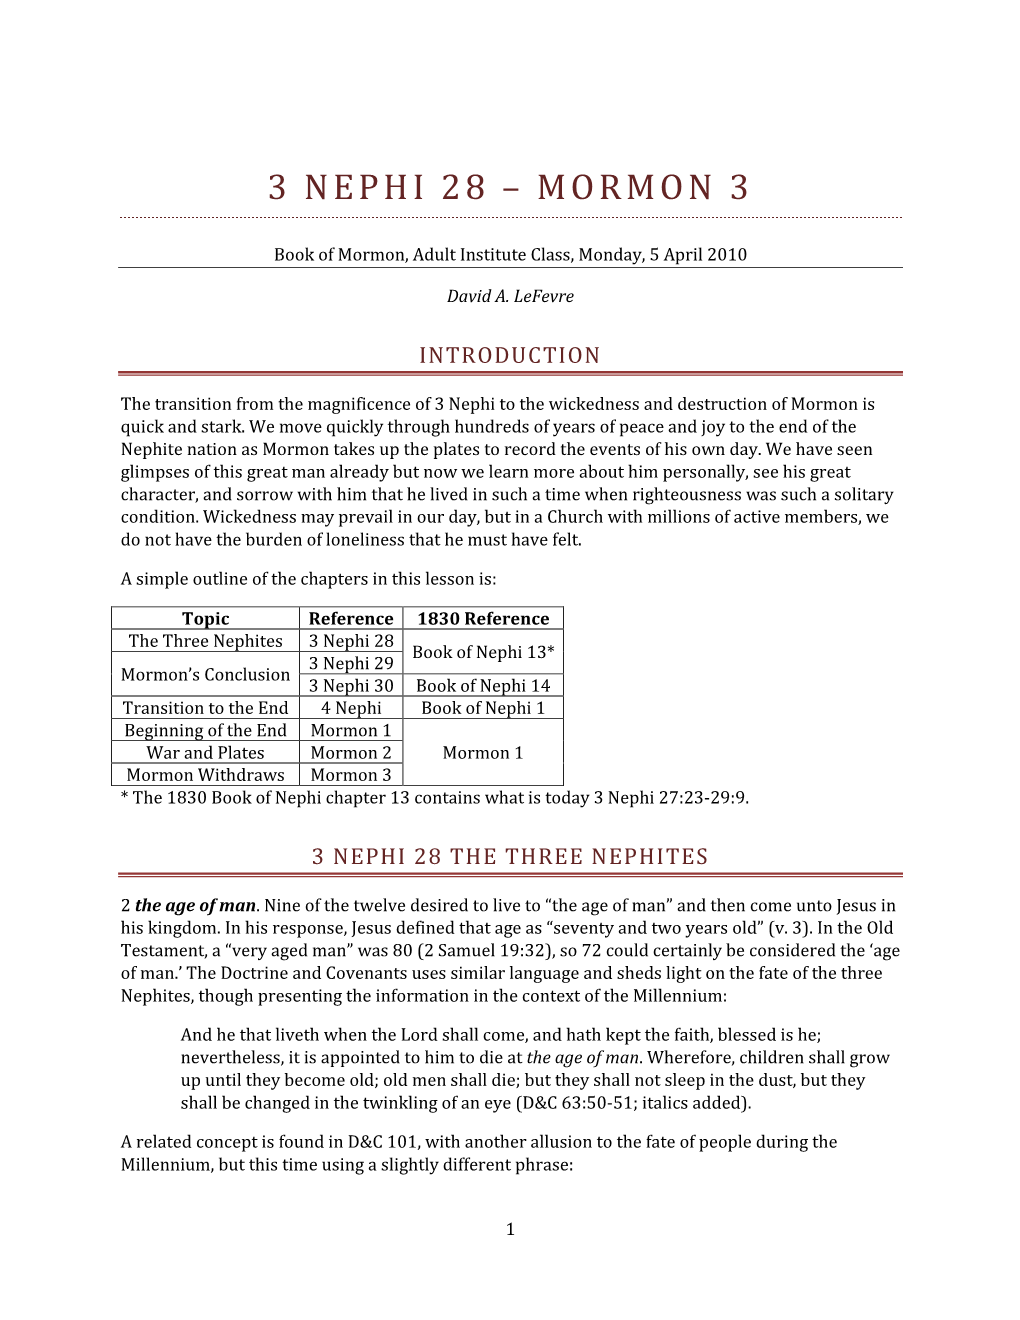 3 Nephi 28 – Mormon 3